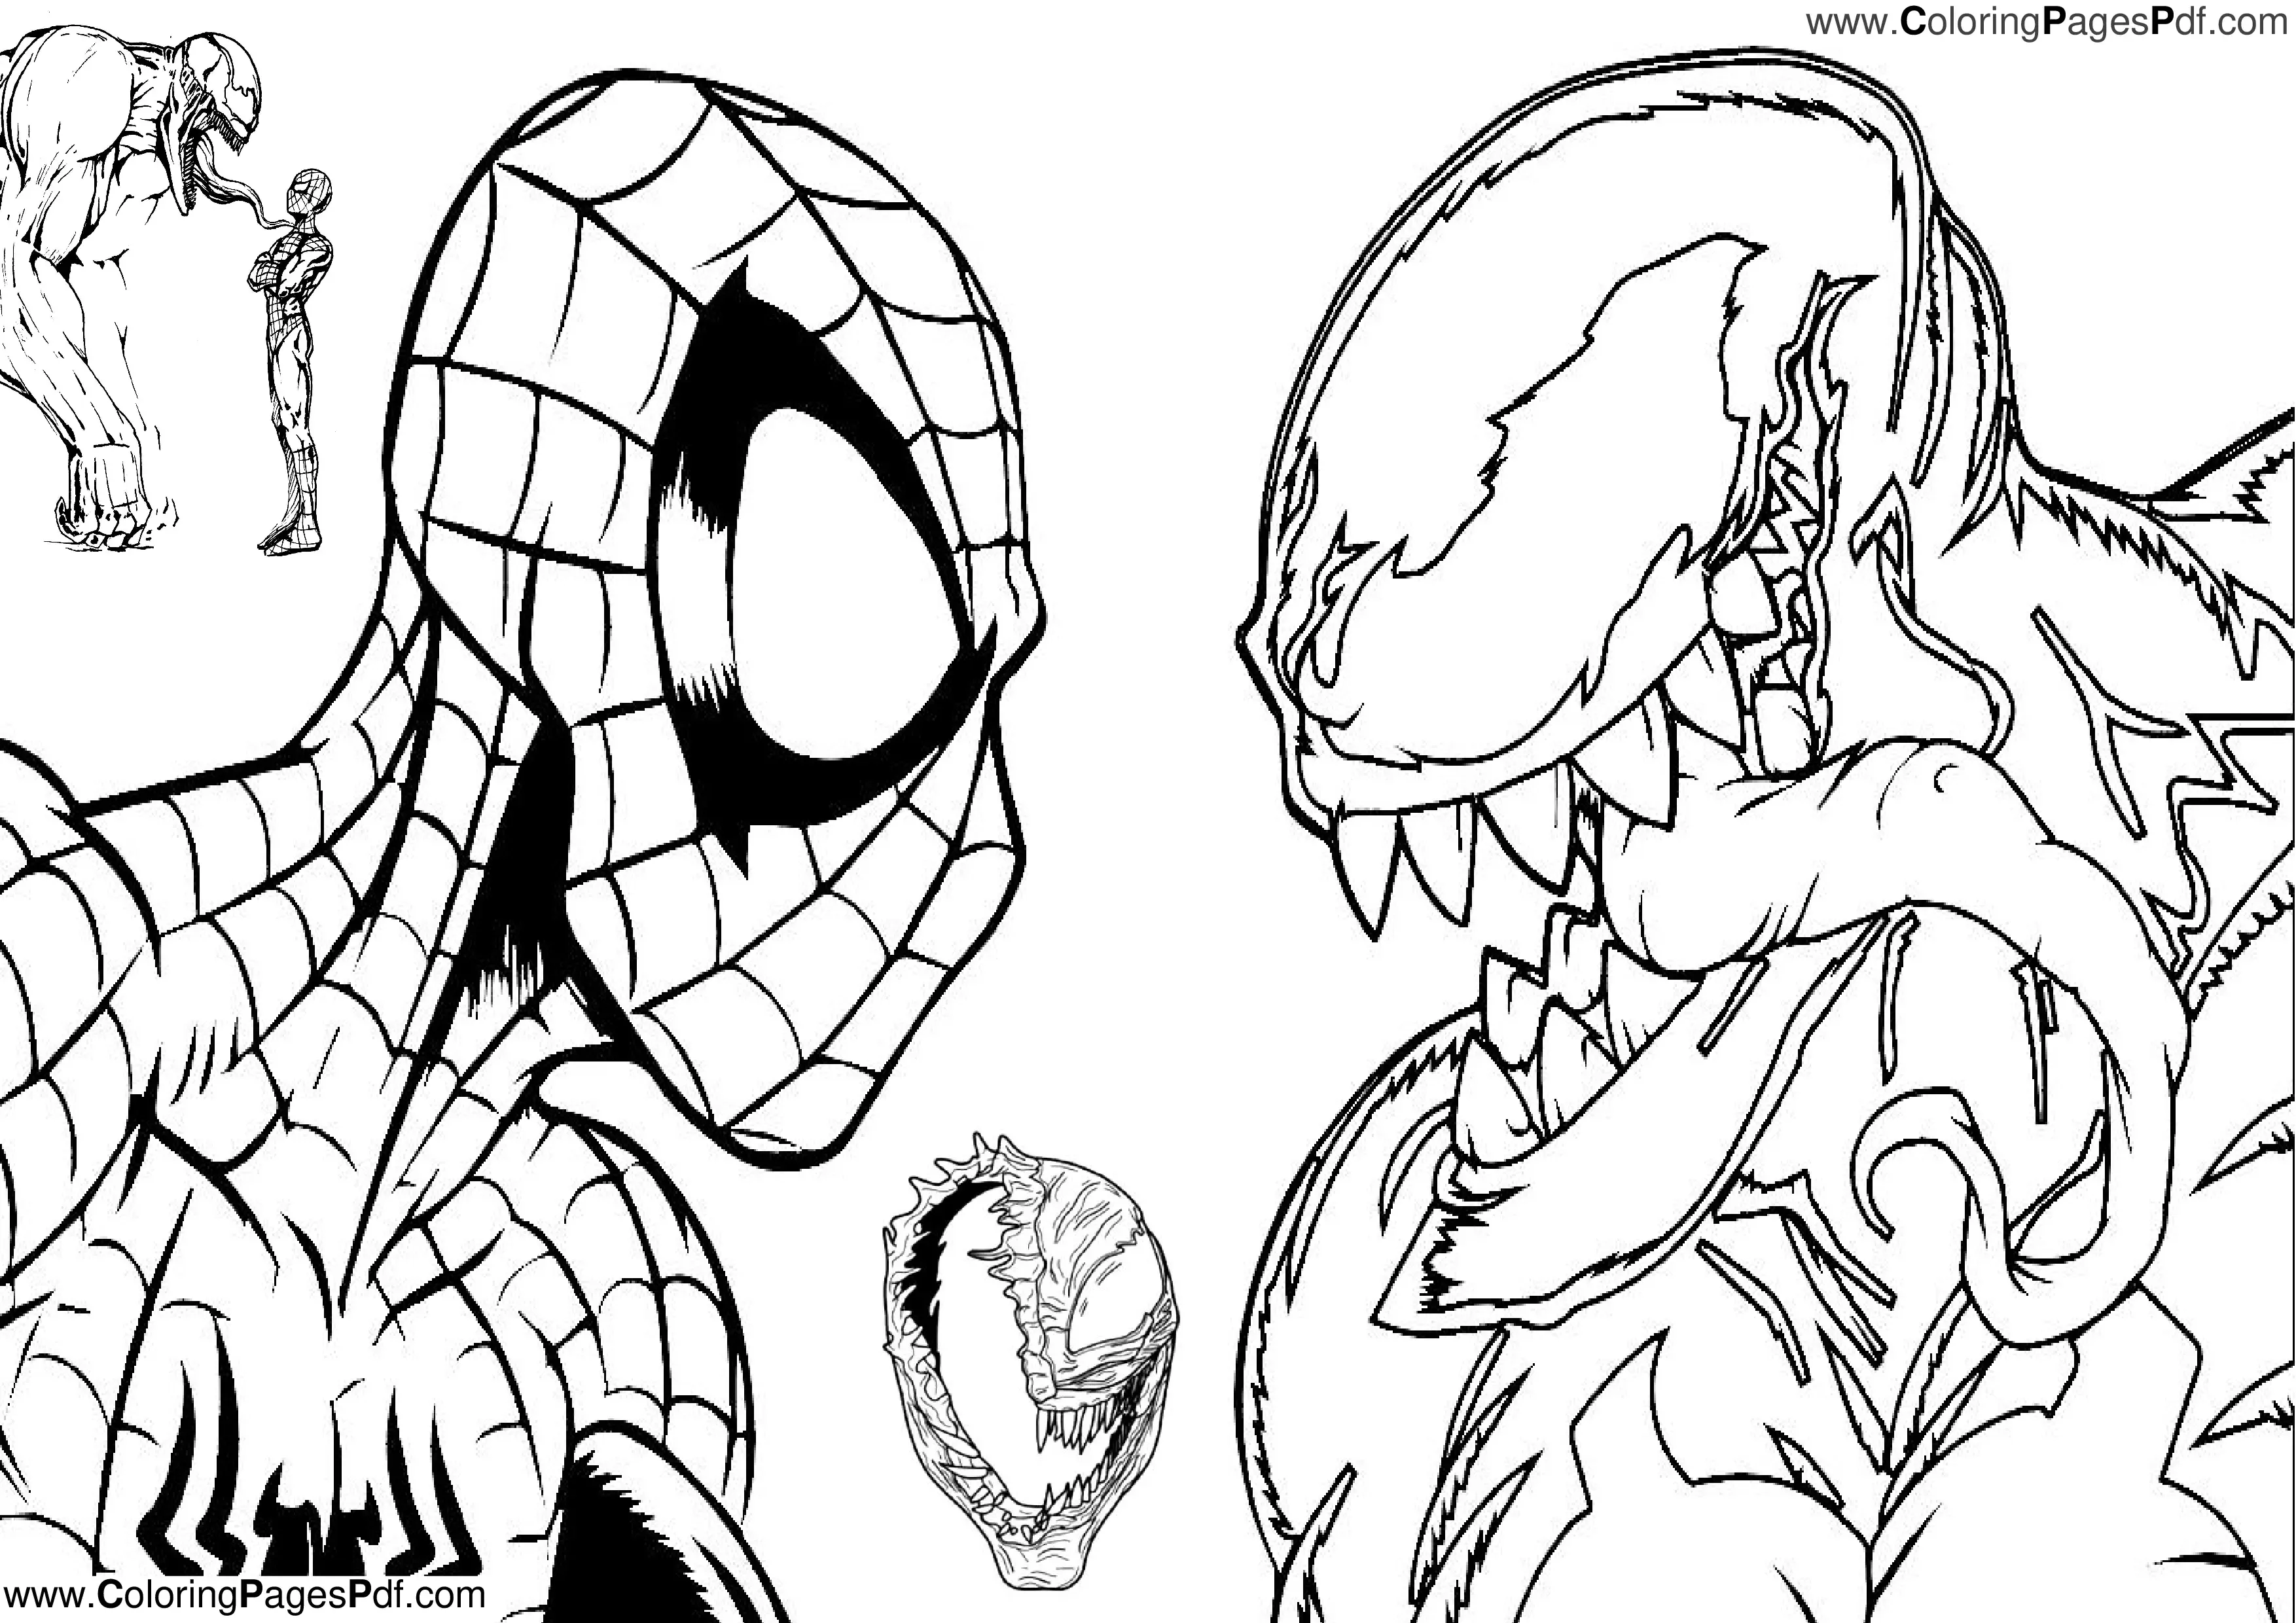 Venom Spiderman coloring pages